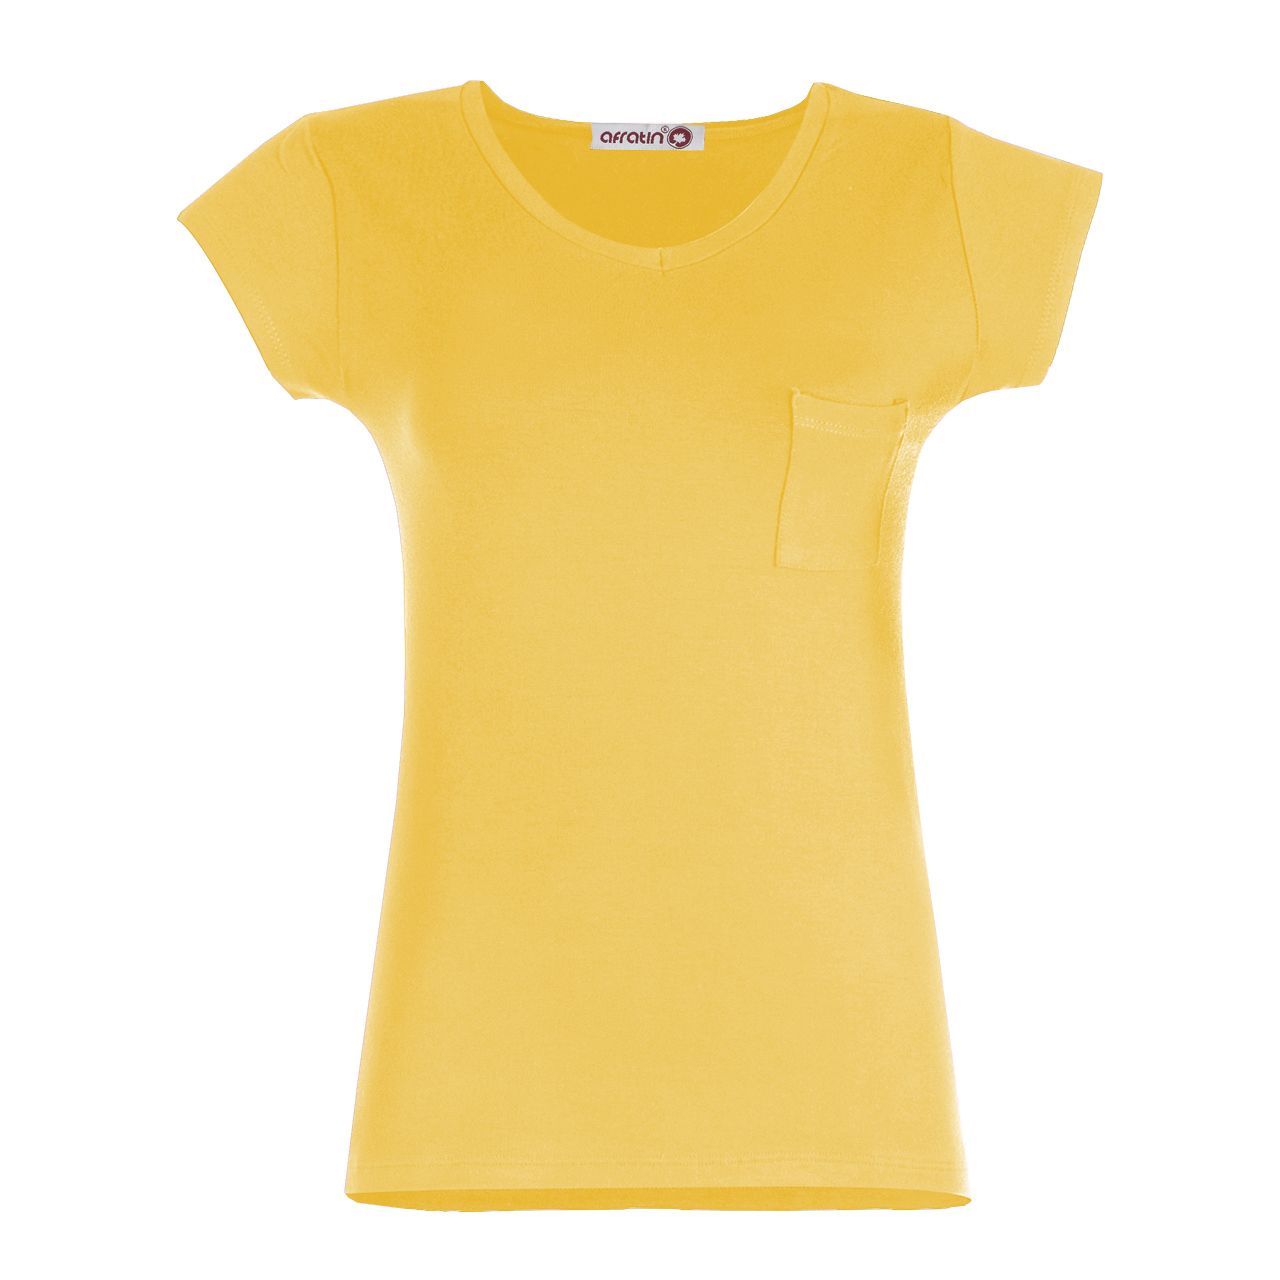  تی شرت زنانه افراتین کد 2515 رنگ زرد -  - 2